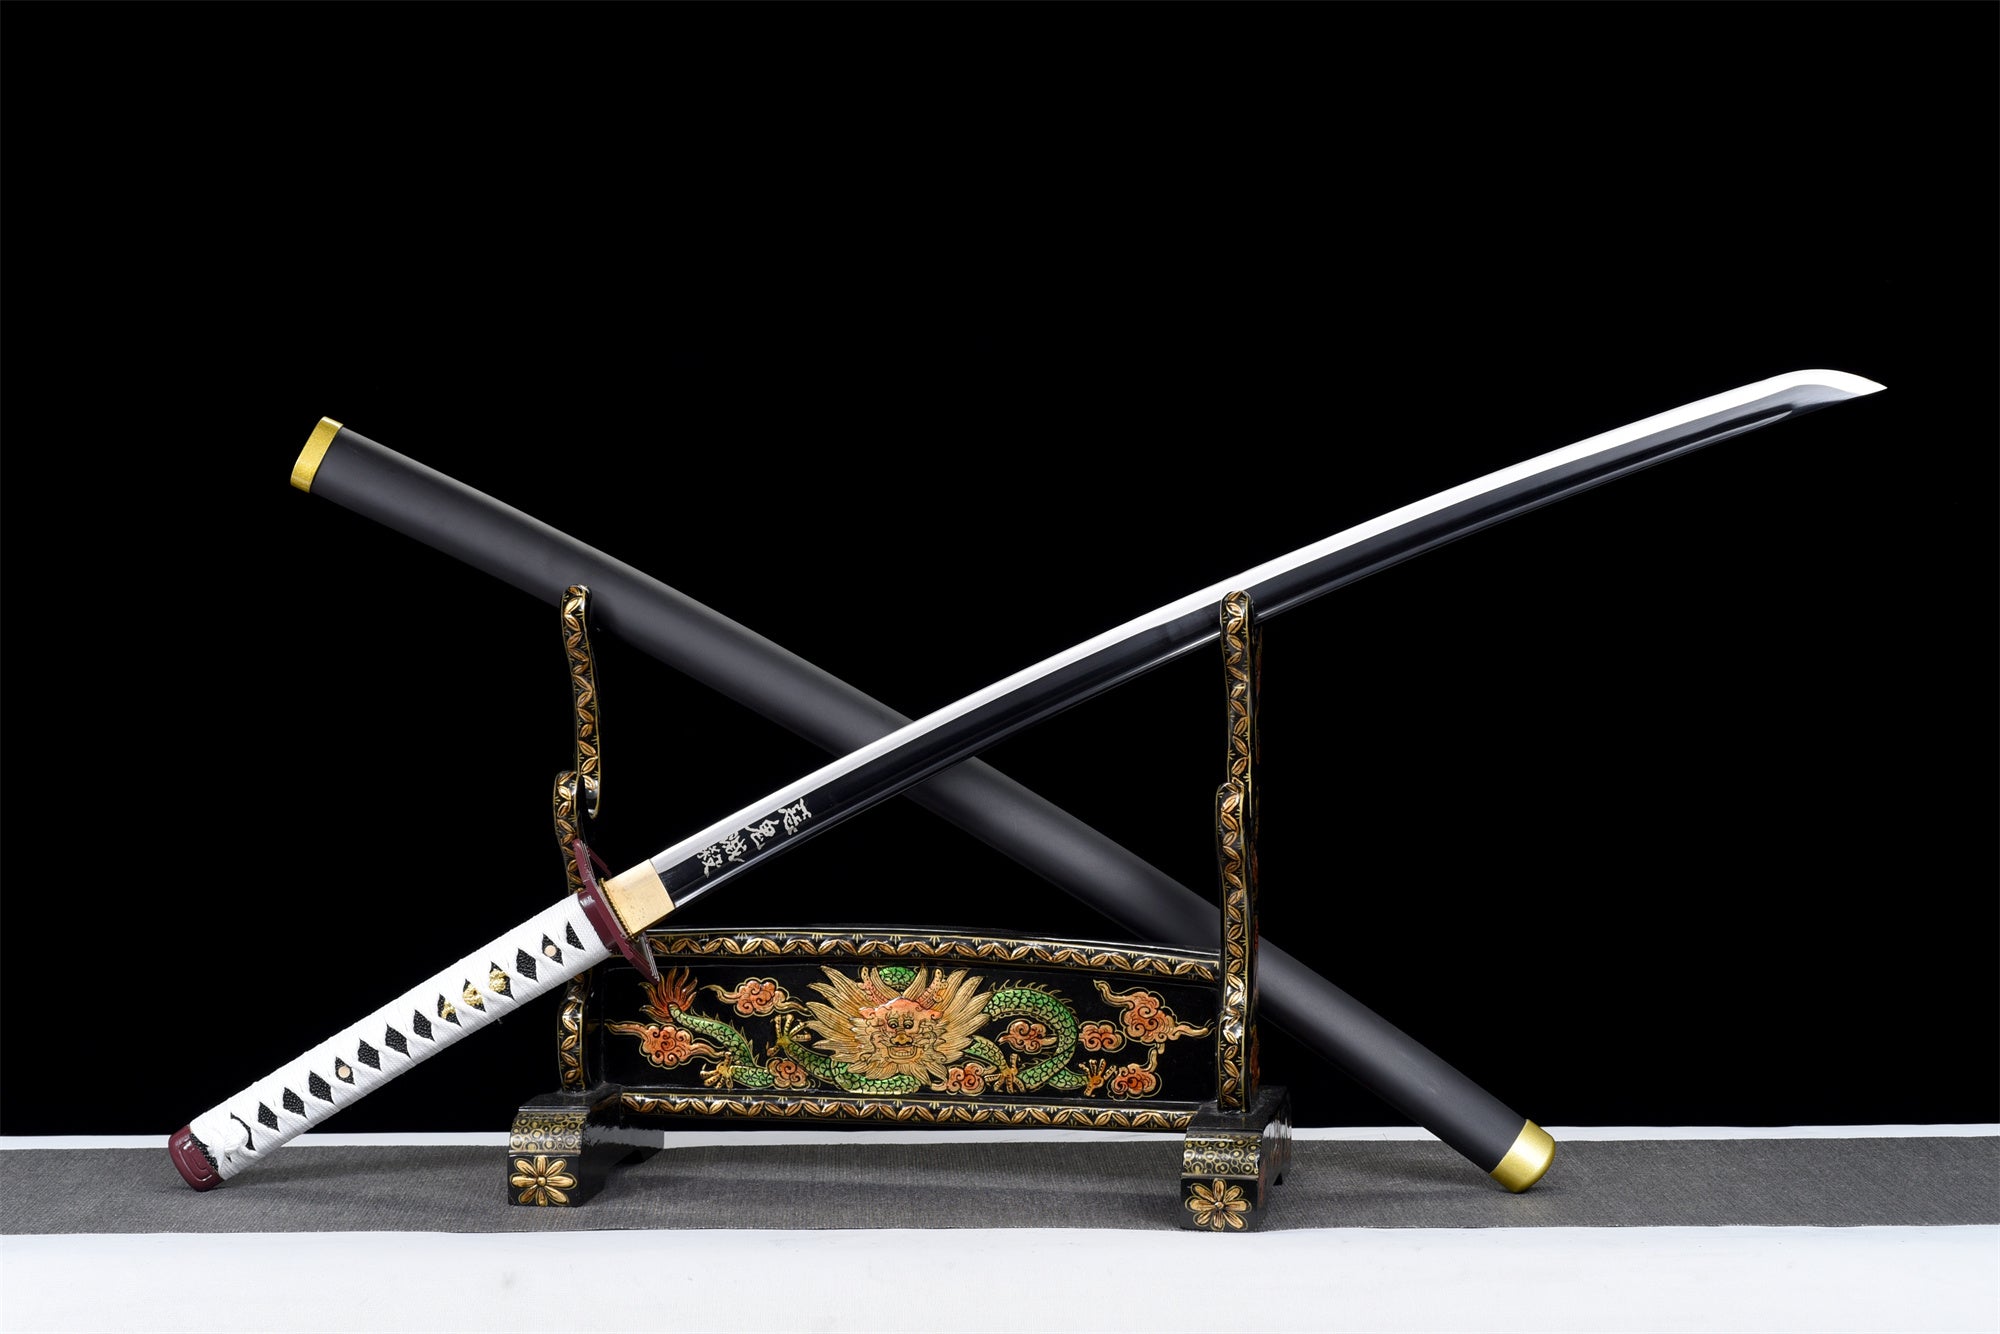 Anime Sword,Roasted Black Blade,Anime Cosplay,Japanese Samurai Sword,Real Handmade anime Katana,High-carbon steel,Full Tang